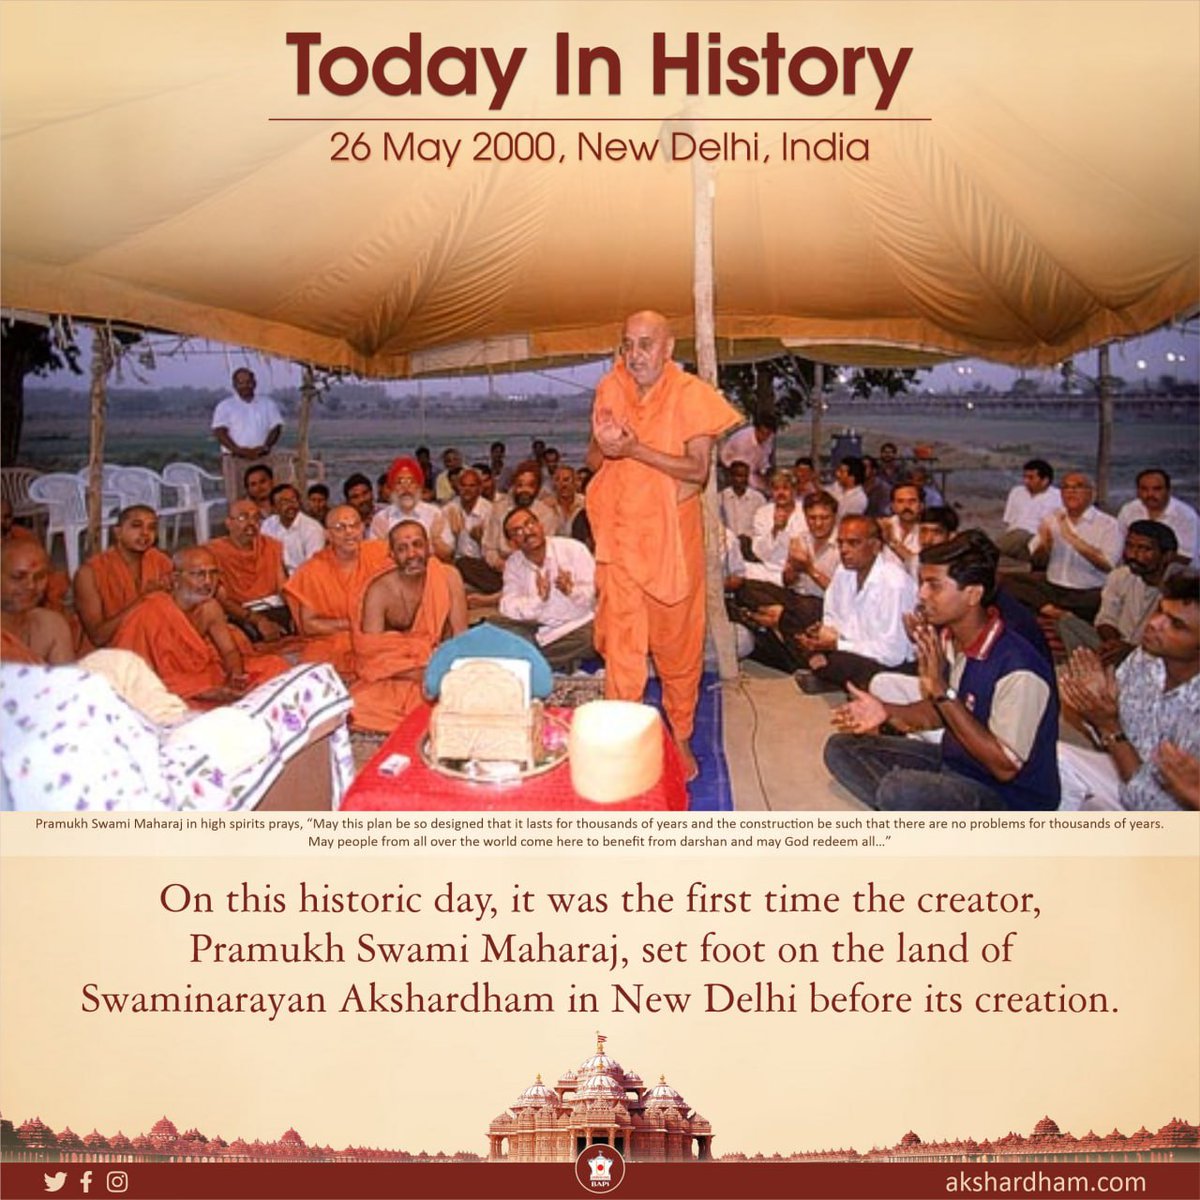 26 May 2000 - #OnThisDay, the first time the creator, Pramukh Swami Maharaj, set foot on the land of Swaminarayan #Akshardham in New Delhi before its creation.

#historic #memories
#baps #psm100 #pramukhswami100